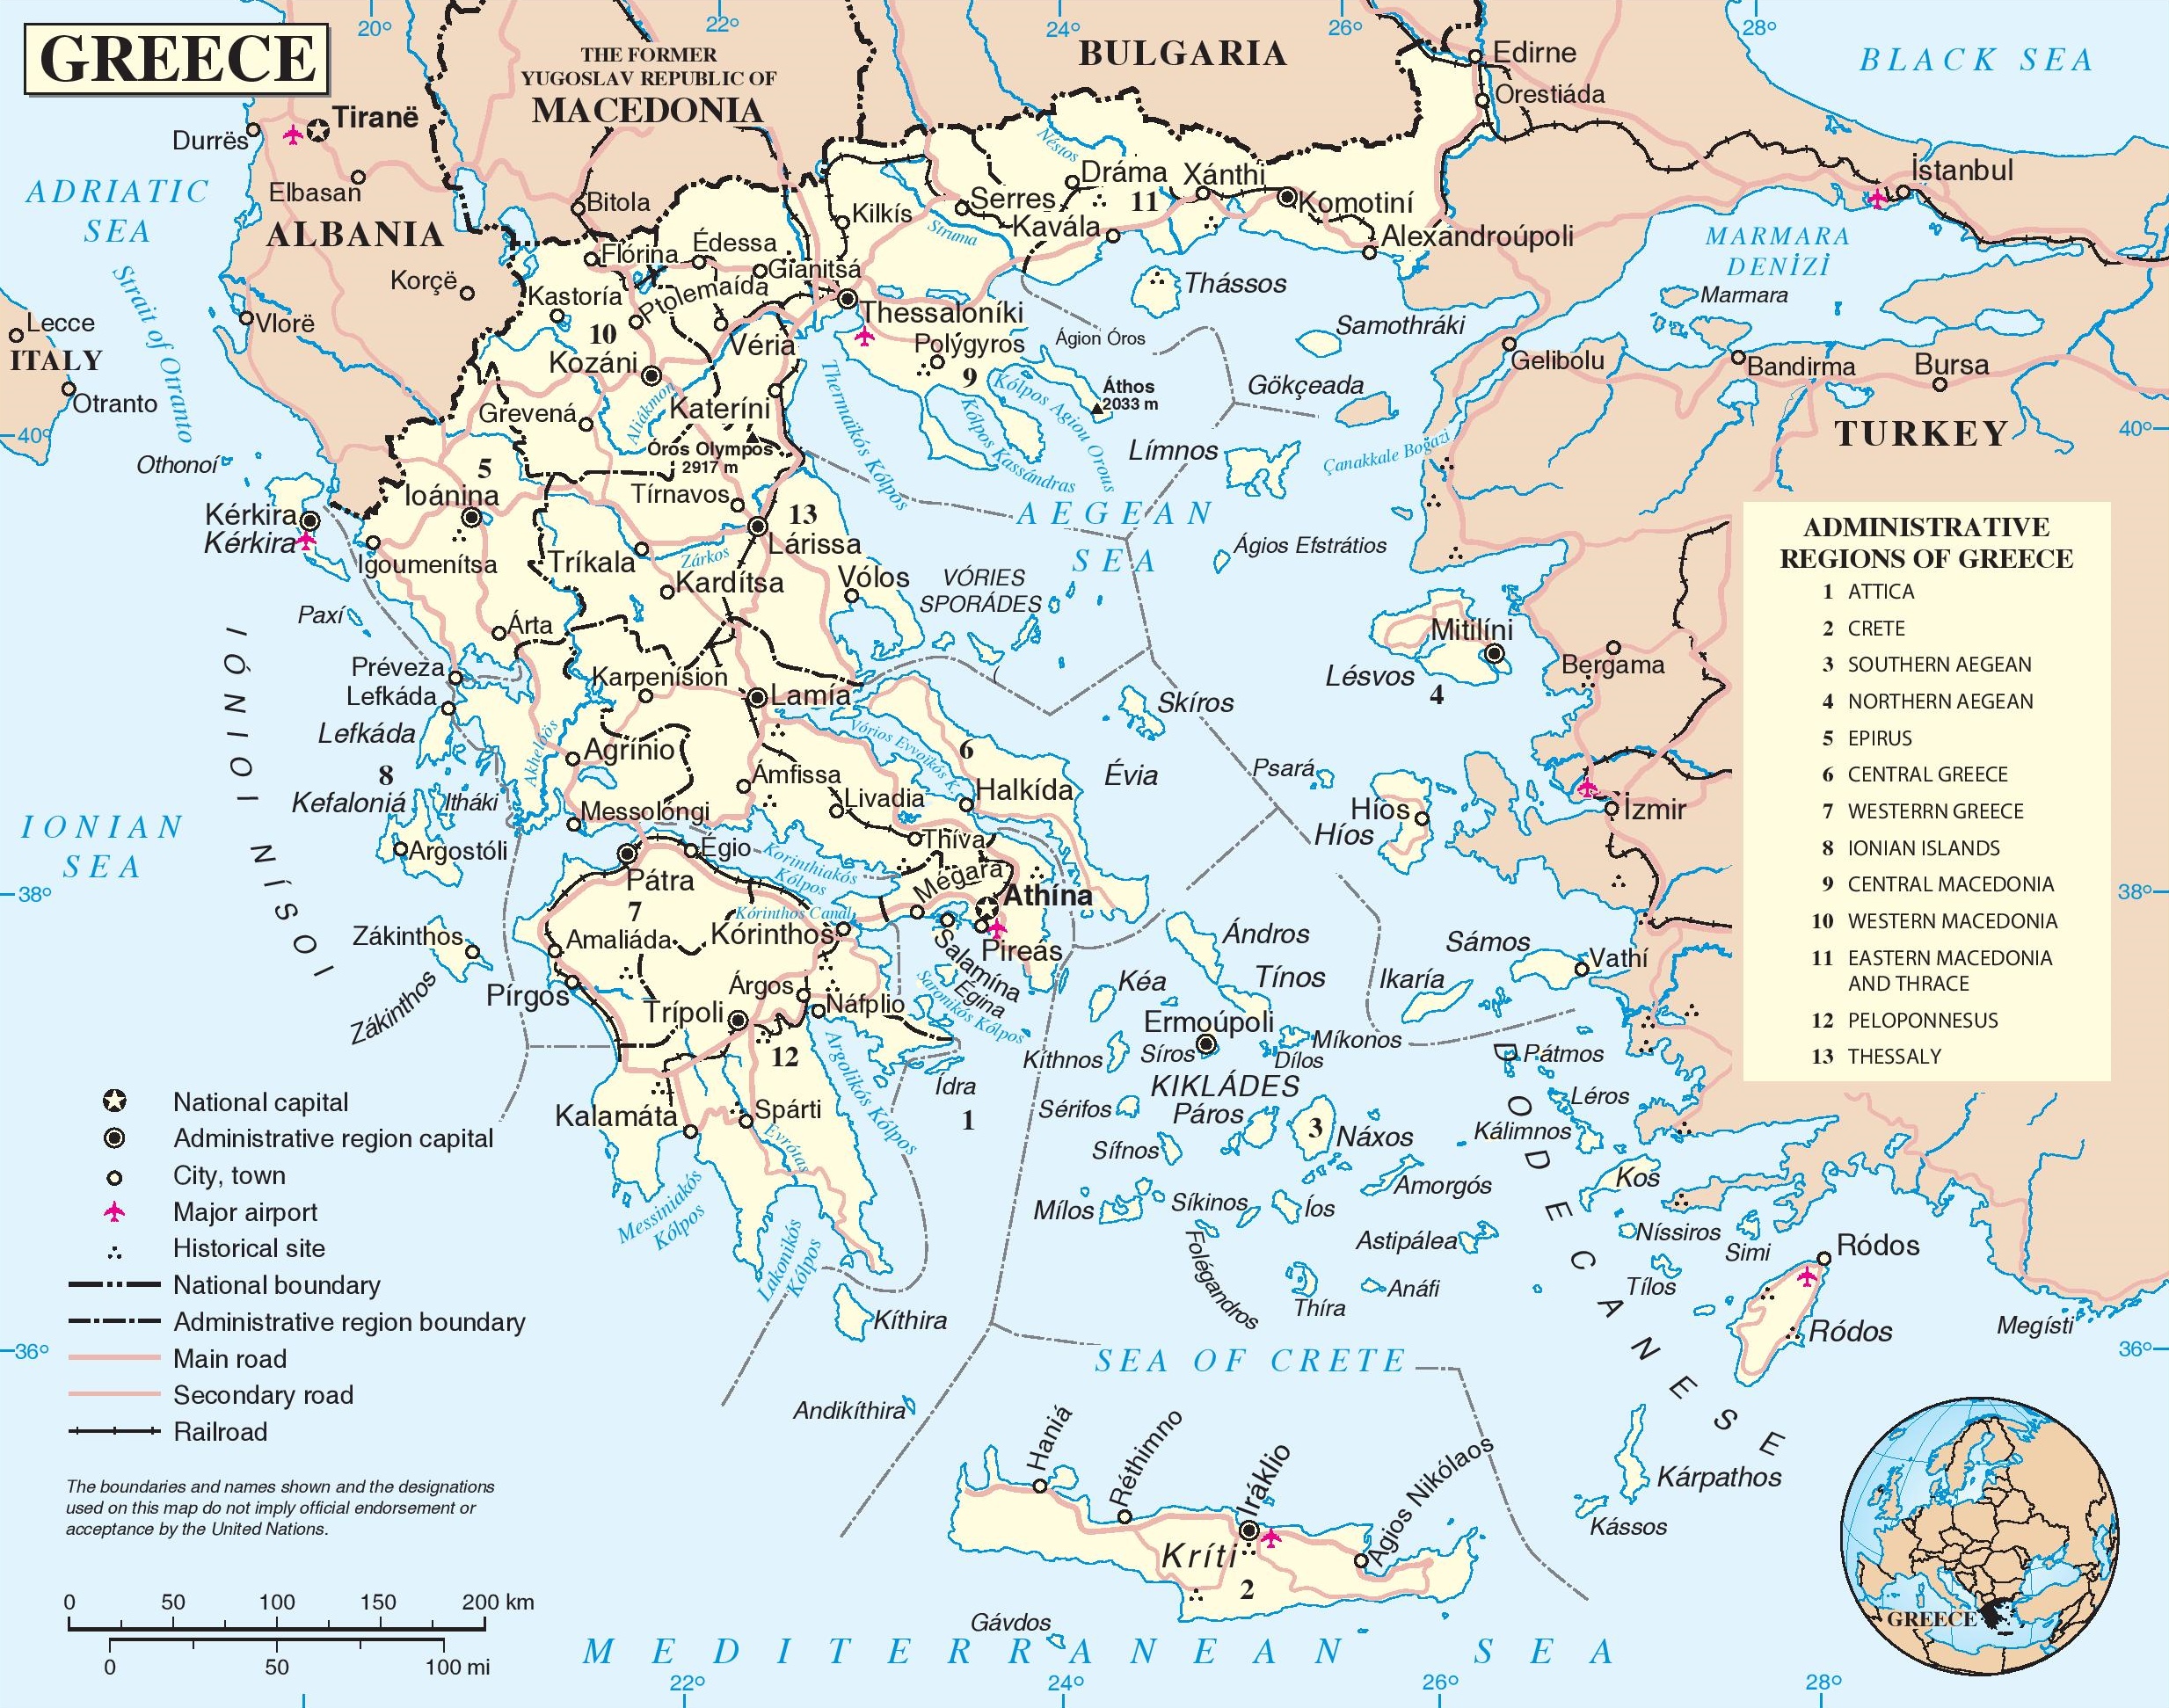 Show Greece On World Map